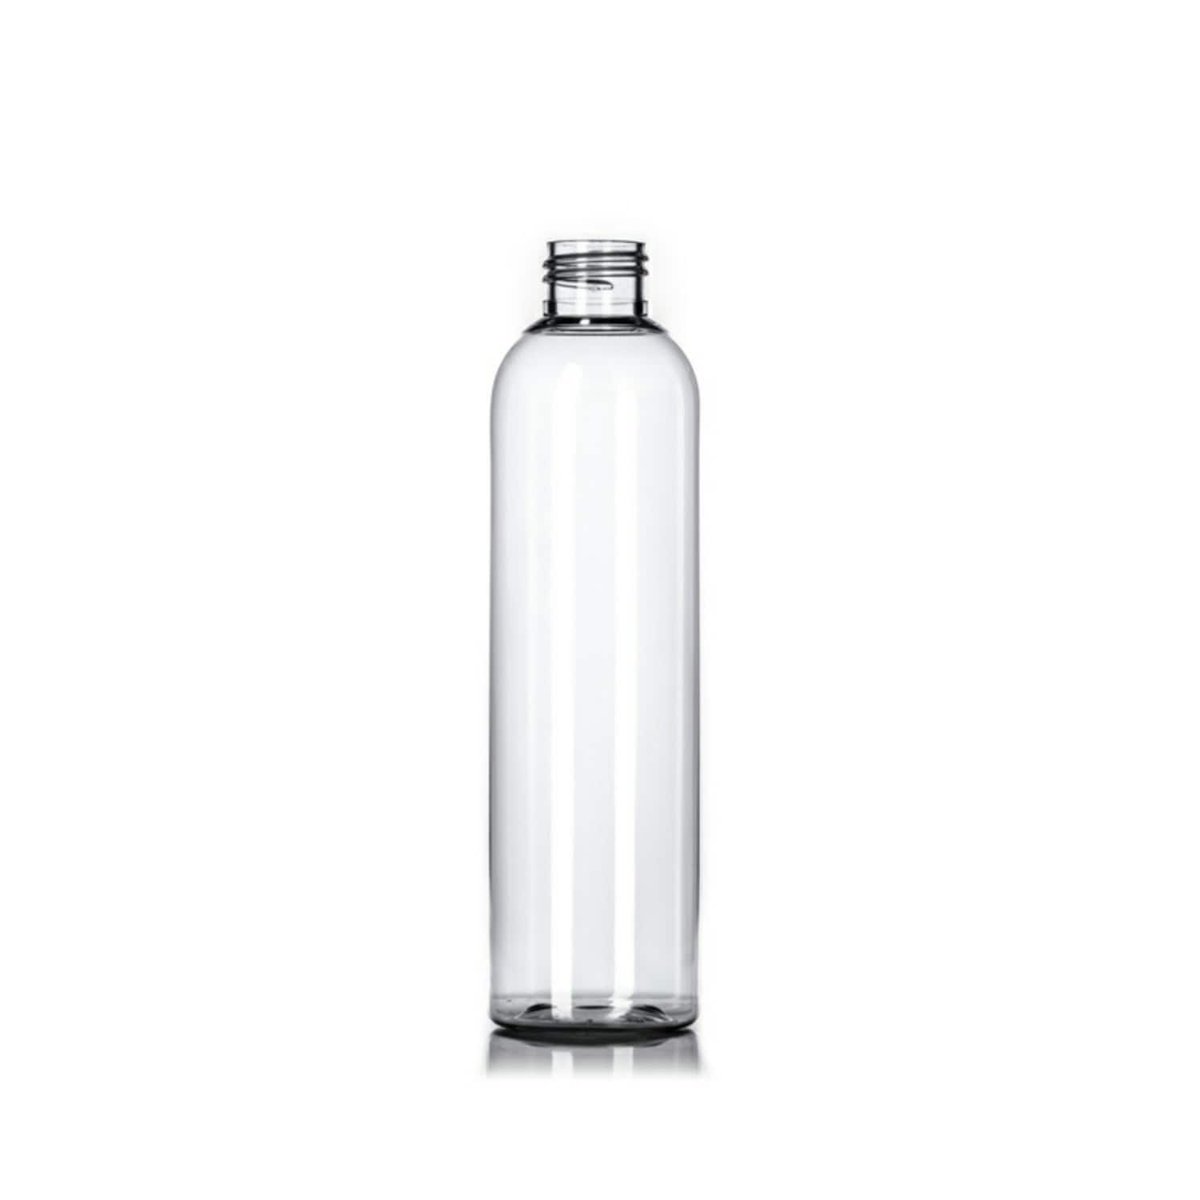 8oz Clear Cosmo PET Plastic Bottles - Set of 25 - BULK25 tuppu.net/496c8c8a #explorepage #bottles #etsyseller #beautysupply #skincare #blackownedbusiness #cosmetics #handmade #trending #WholesaleBottles